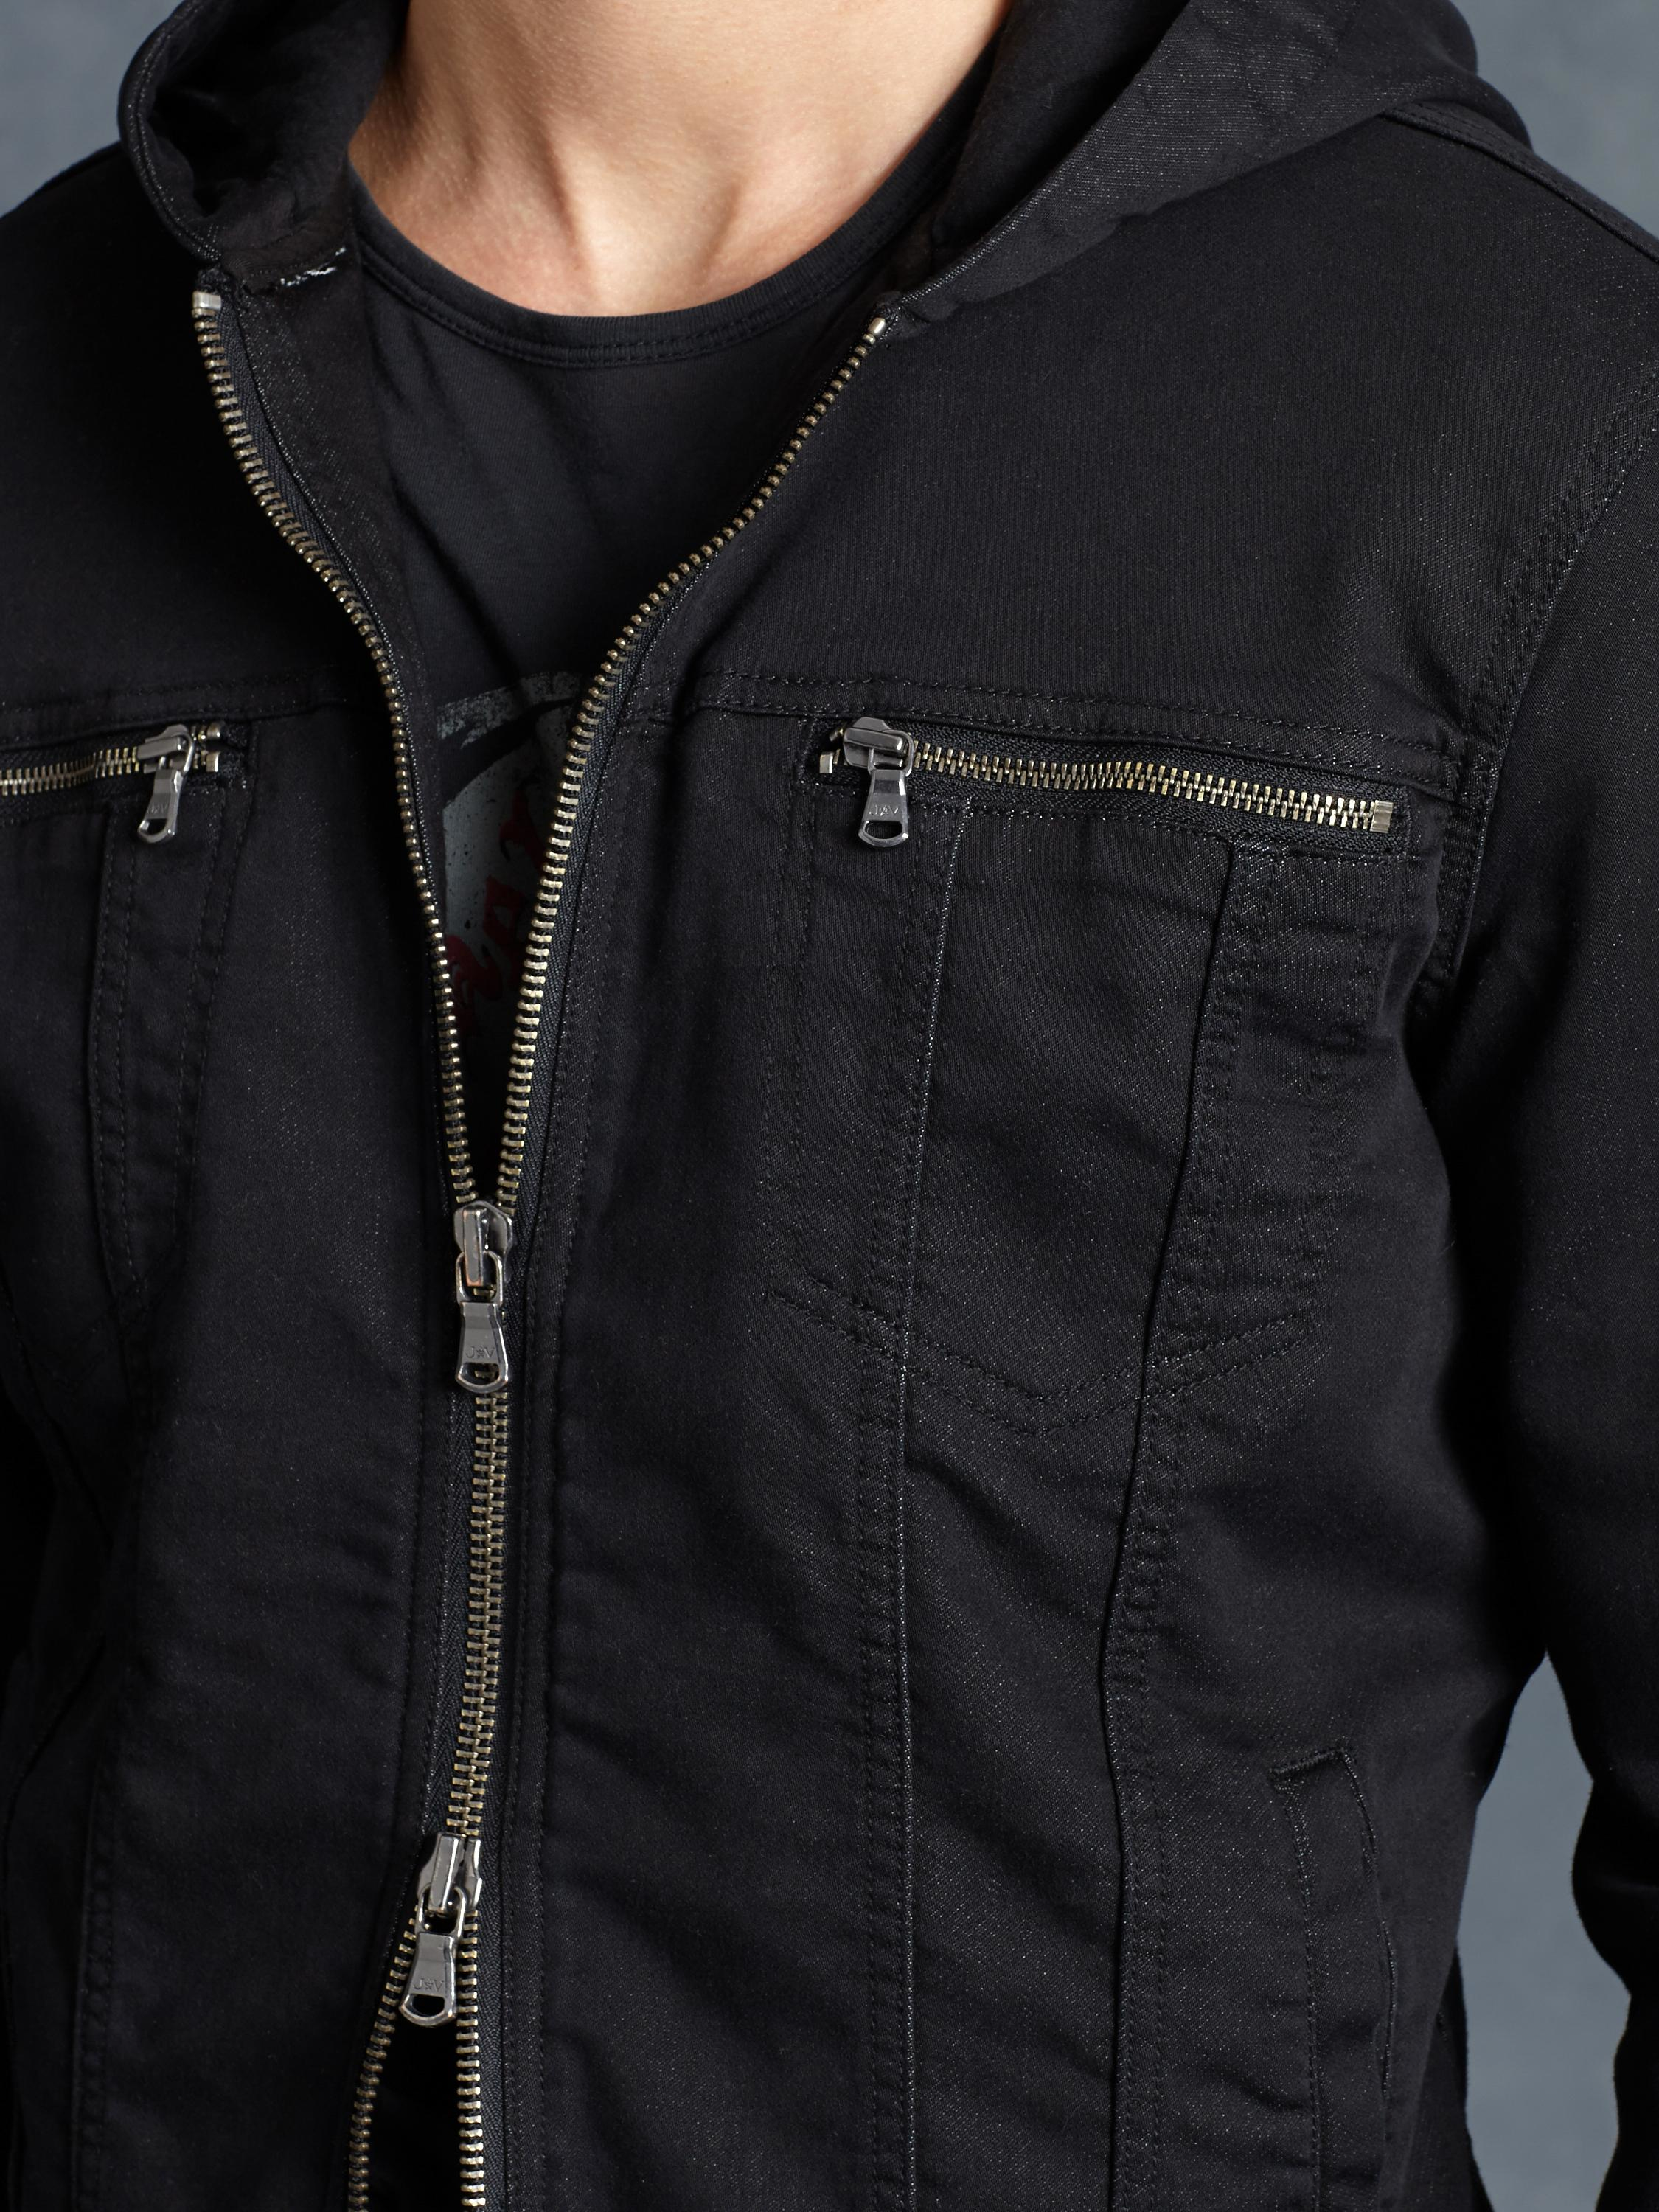 John Varvatos Denim Jacket, $398 | Amazon.com | Lookastic